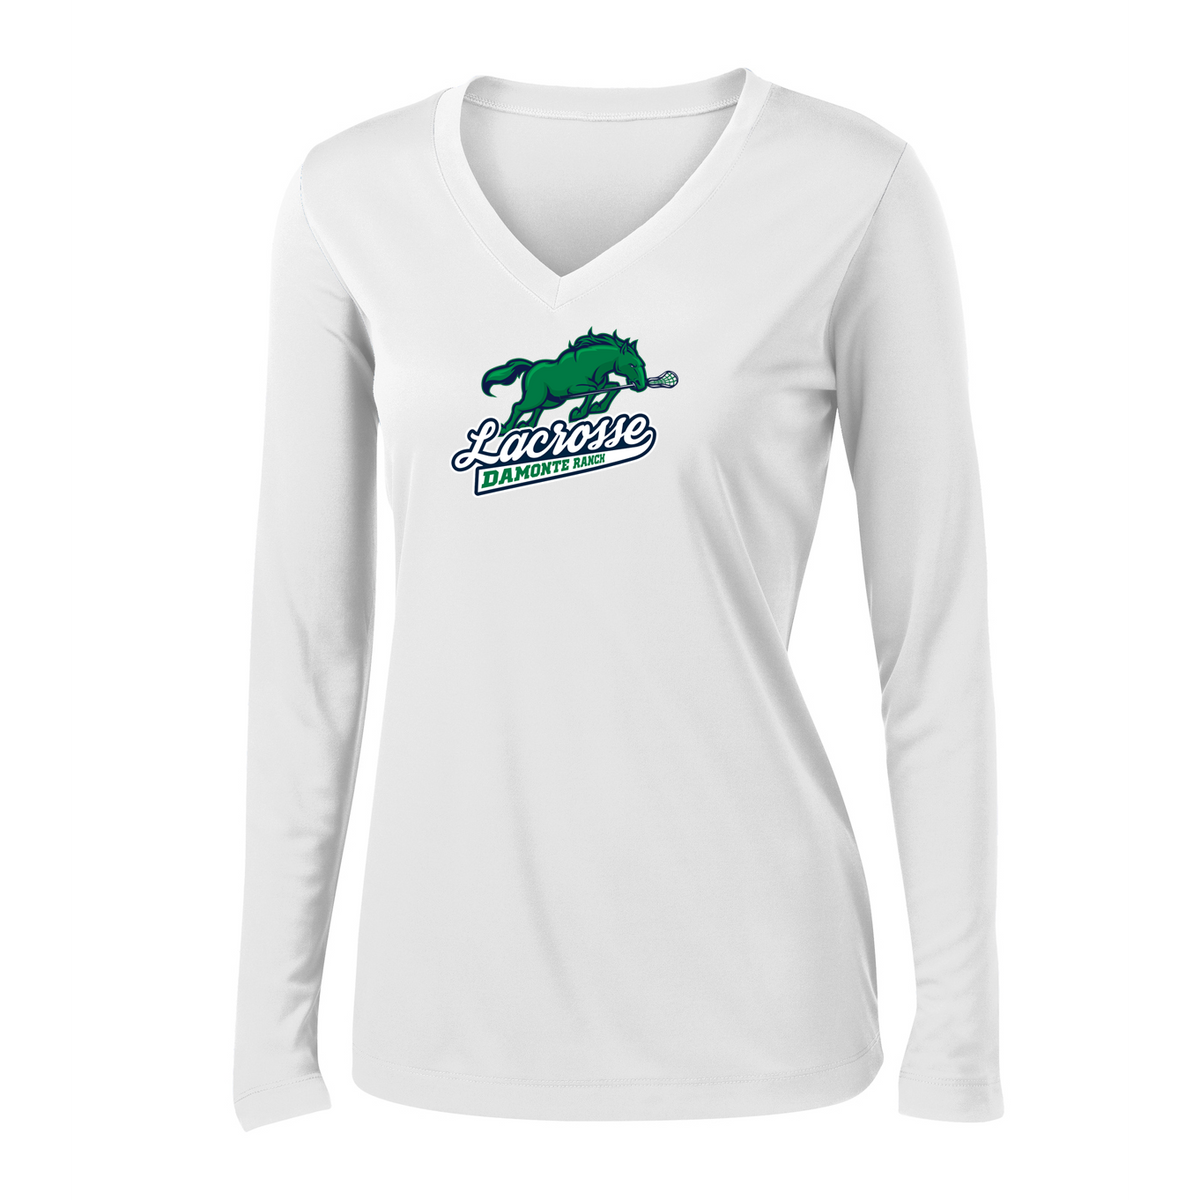 Damonte Ranch Lacrosse Women's Long Sleeve Performance Shirt